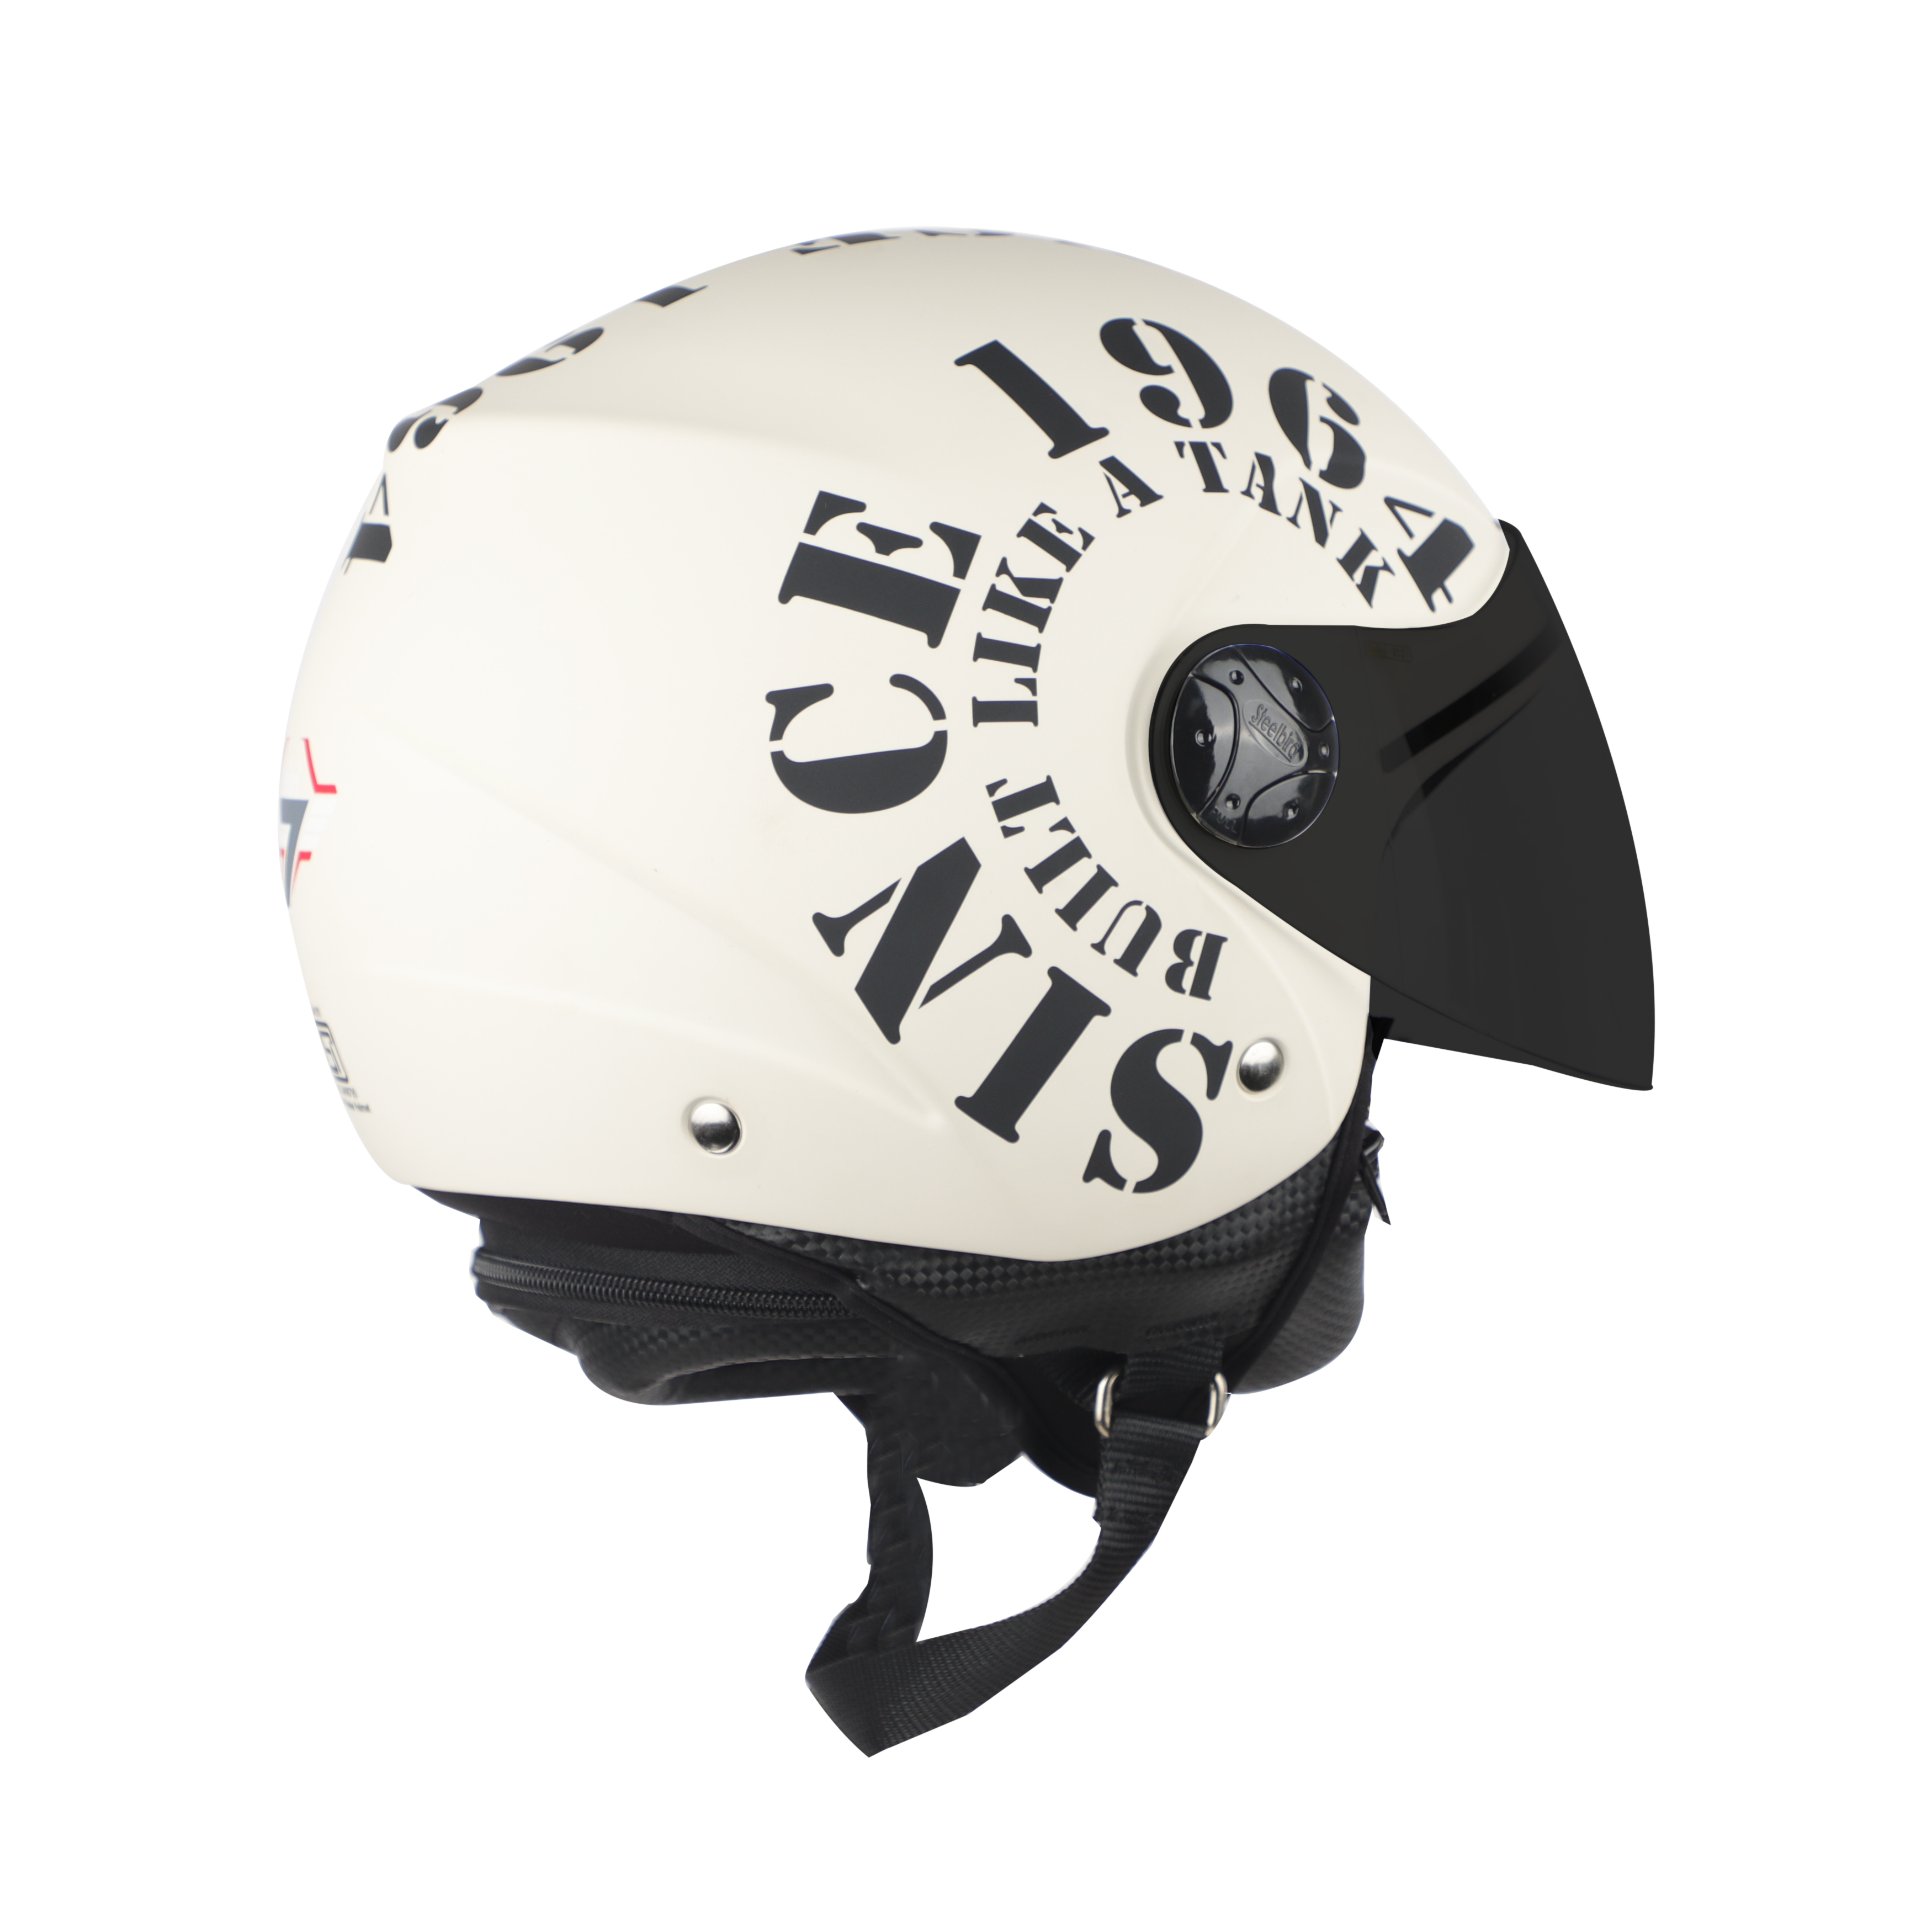 Steelbird SB-02 Tank Full Face ISI Certified Graphic Helmet (Matt Off White Black With Smoke Visor)